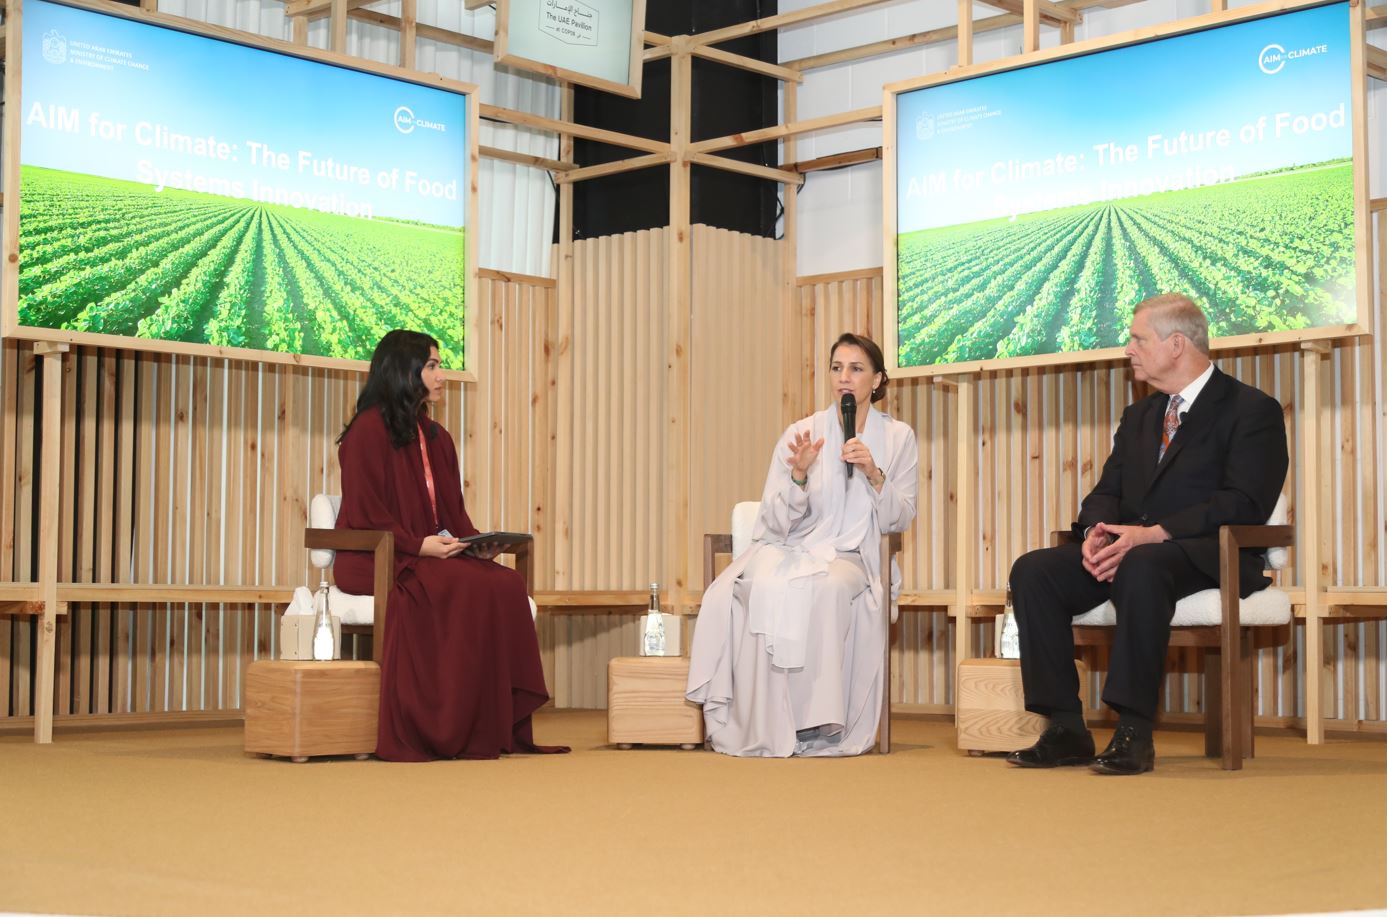 AIM for Climate COP28 Event at UAE Pavilion